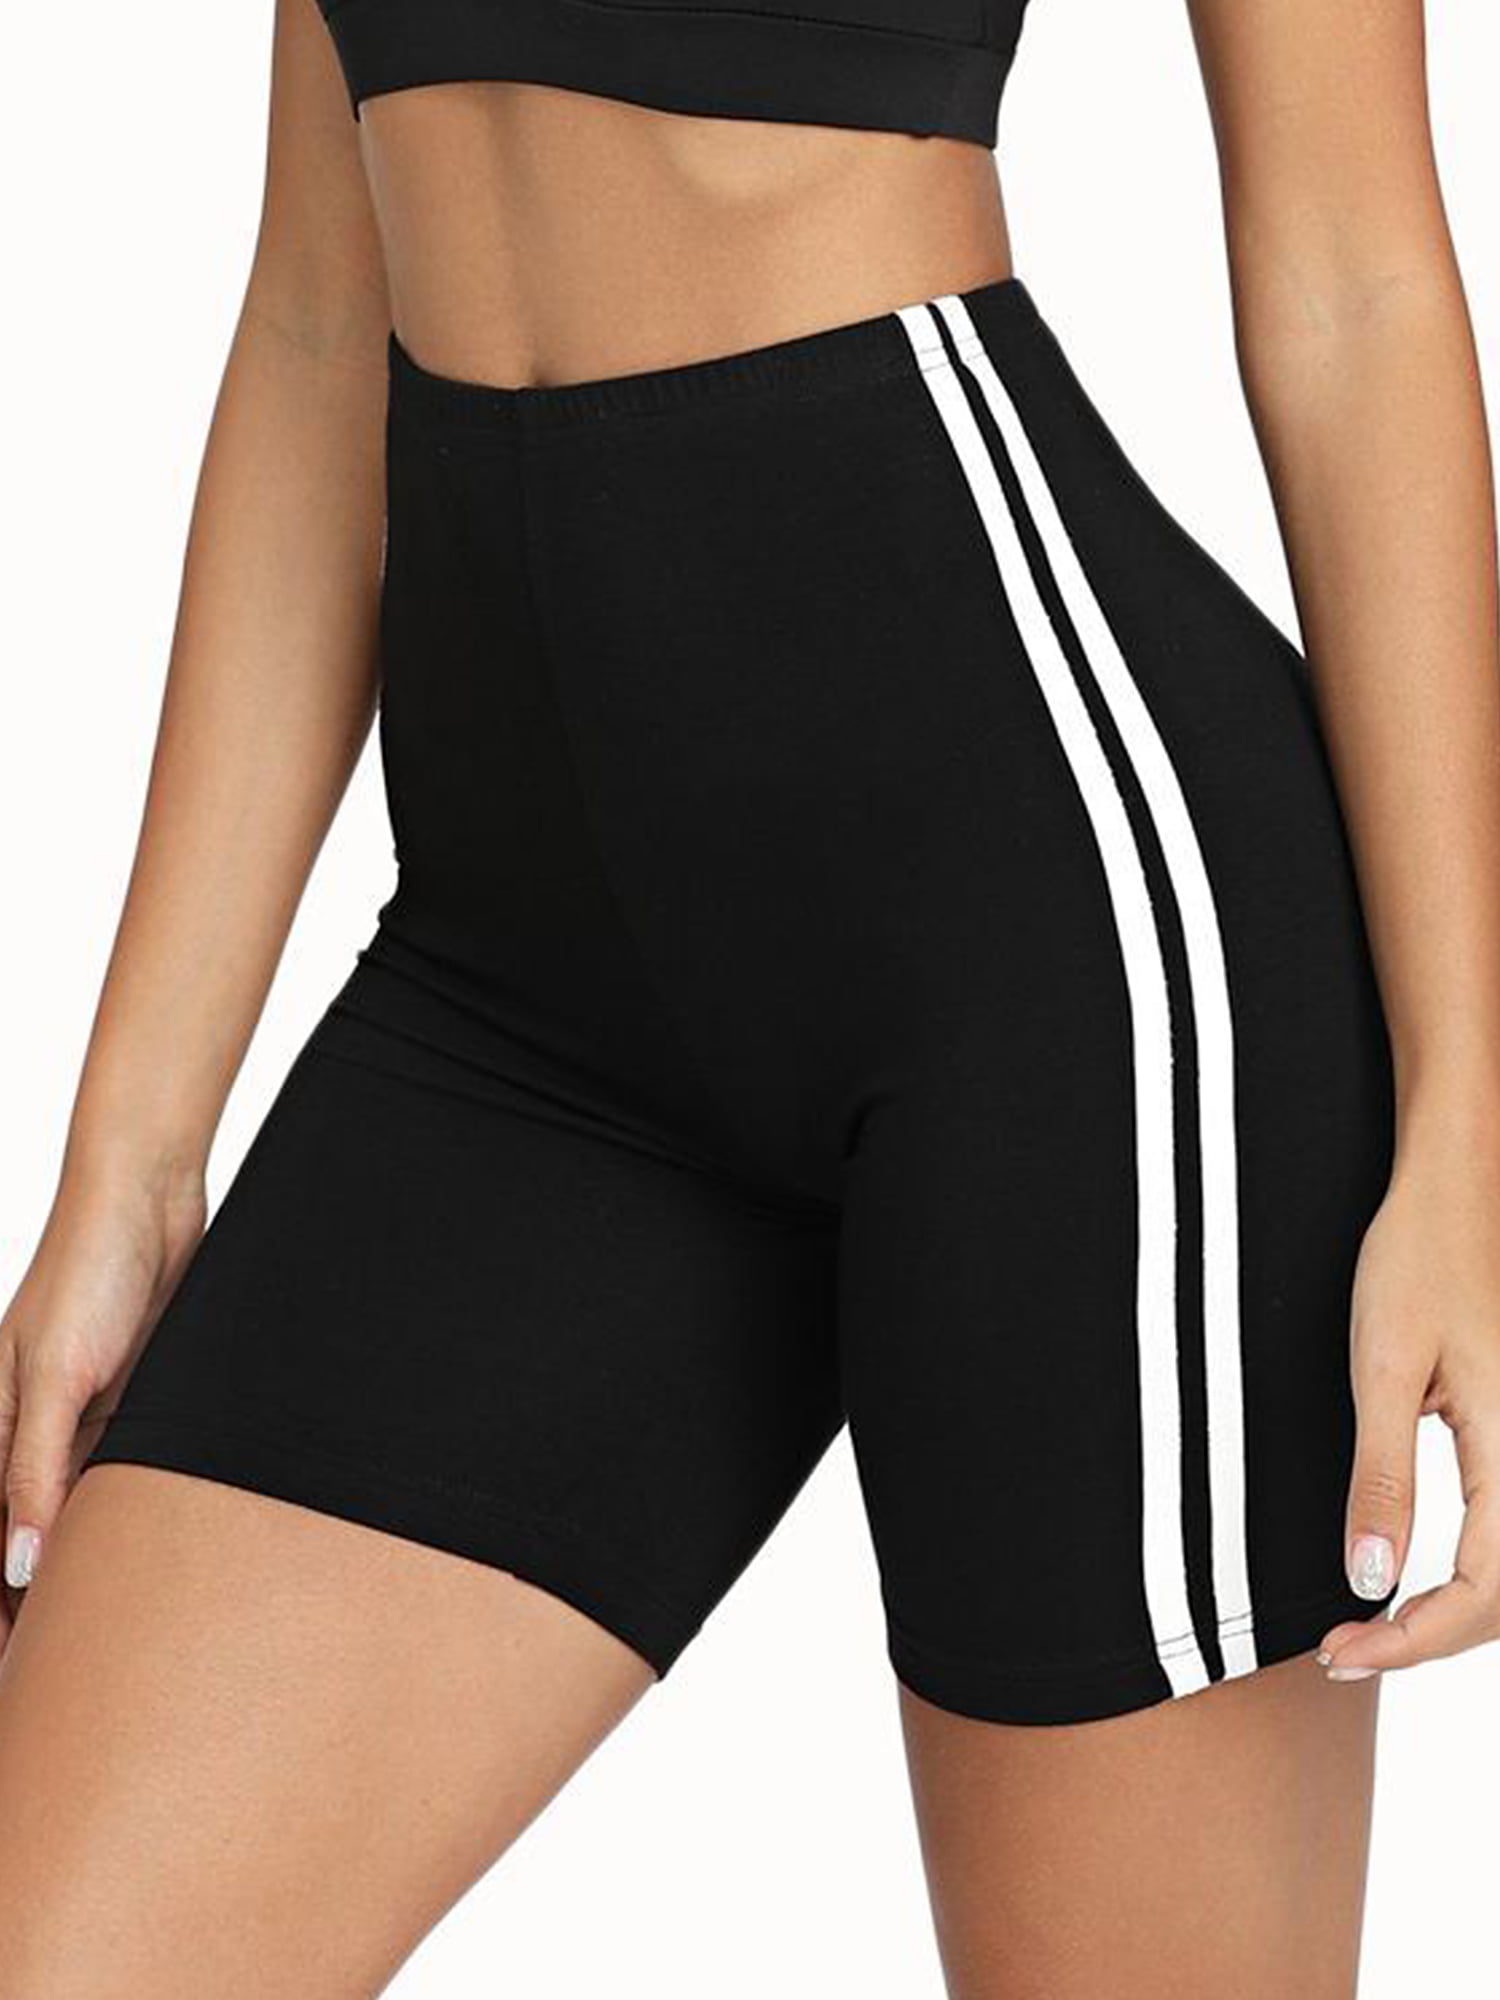 vermers Womens Sports Shorts Casual Beach Summer Running Yoga Hot Pants Mid Waist Elastic Drawstring Short Pants